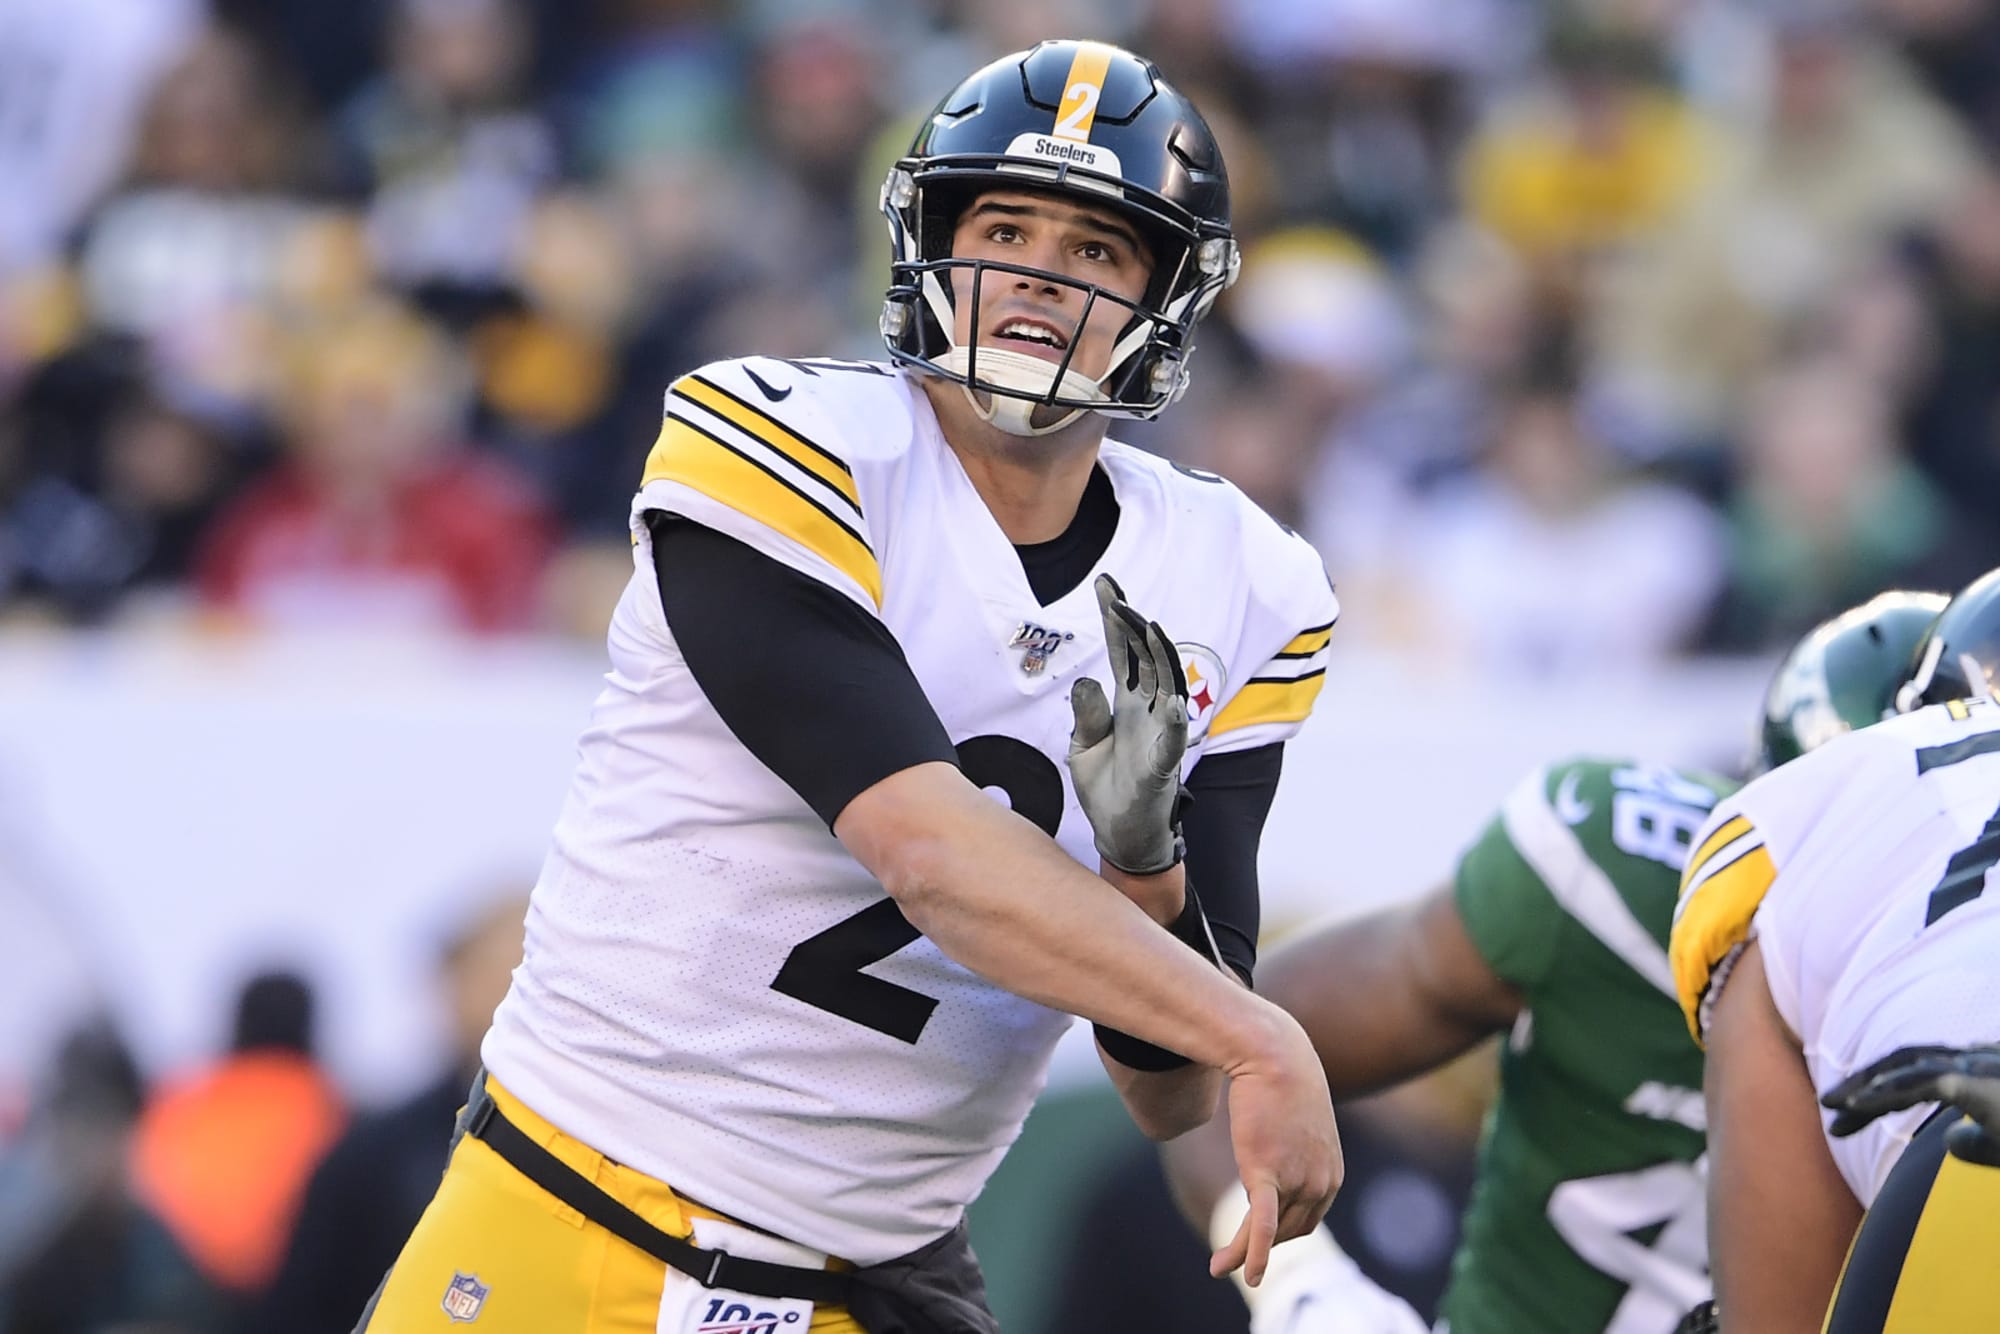 Is backup quarterback still the Steelers biggest need?